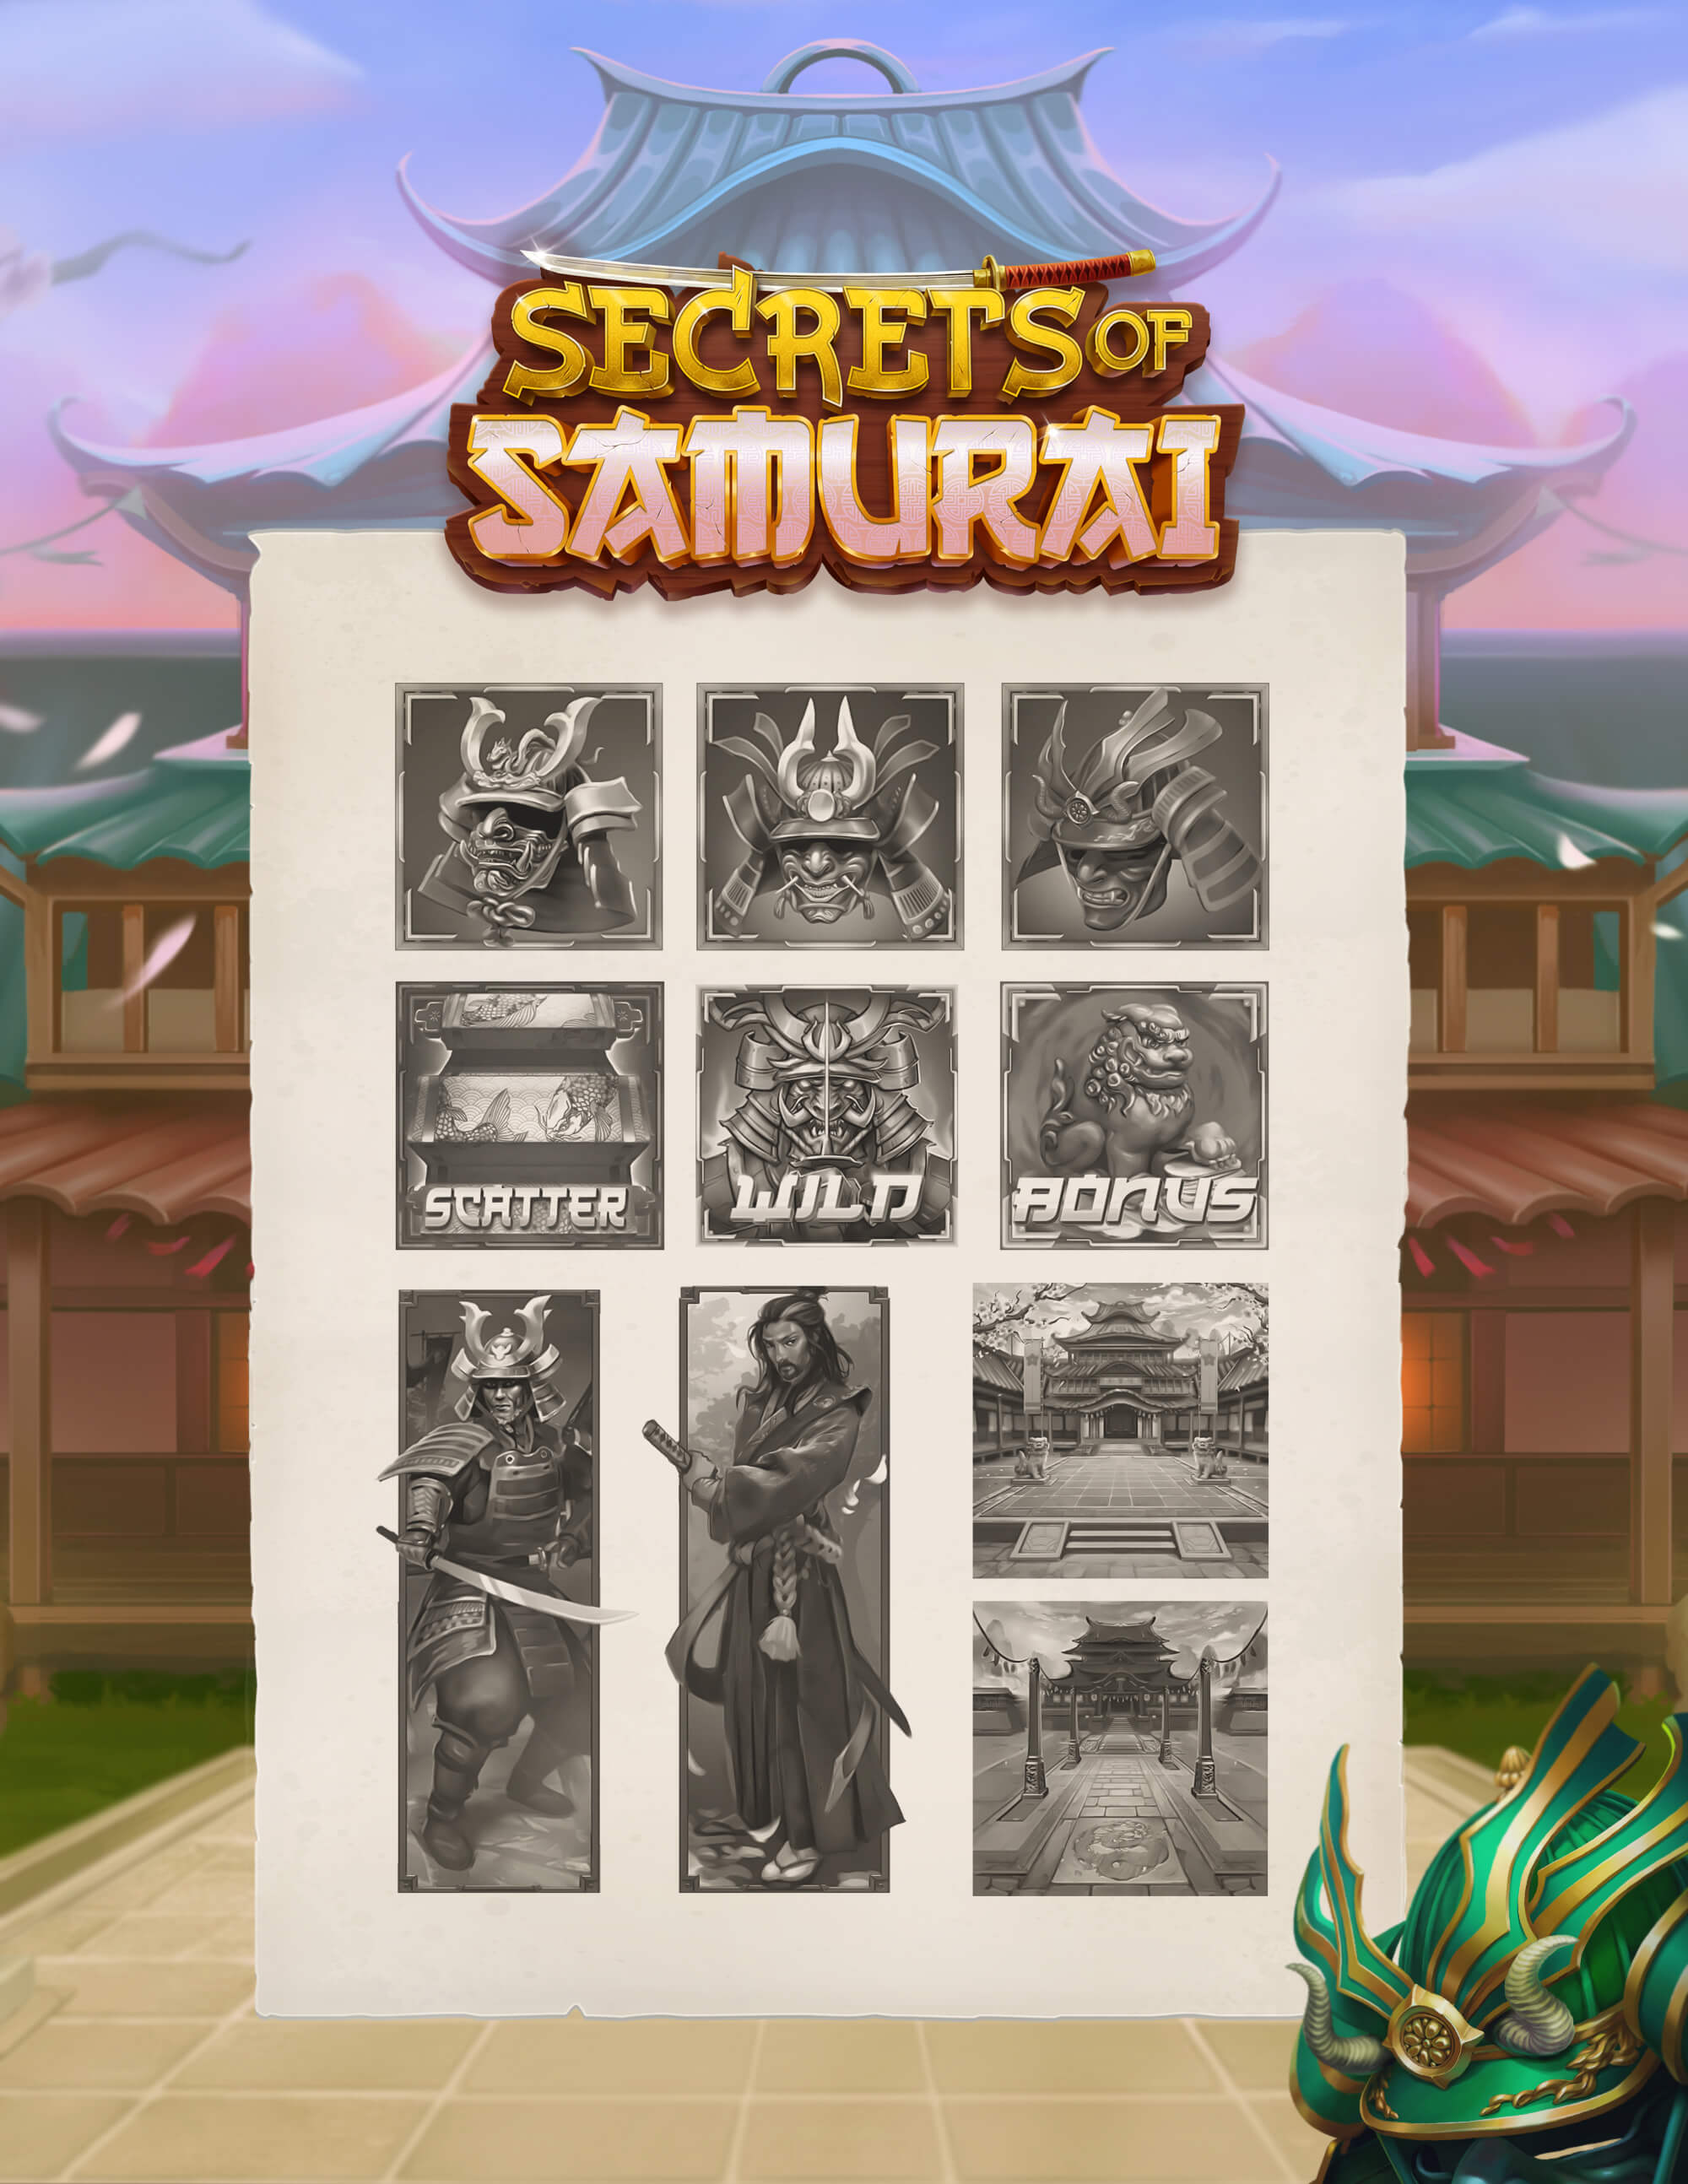 Secrets Of Samurai slot machine concept art